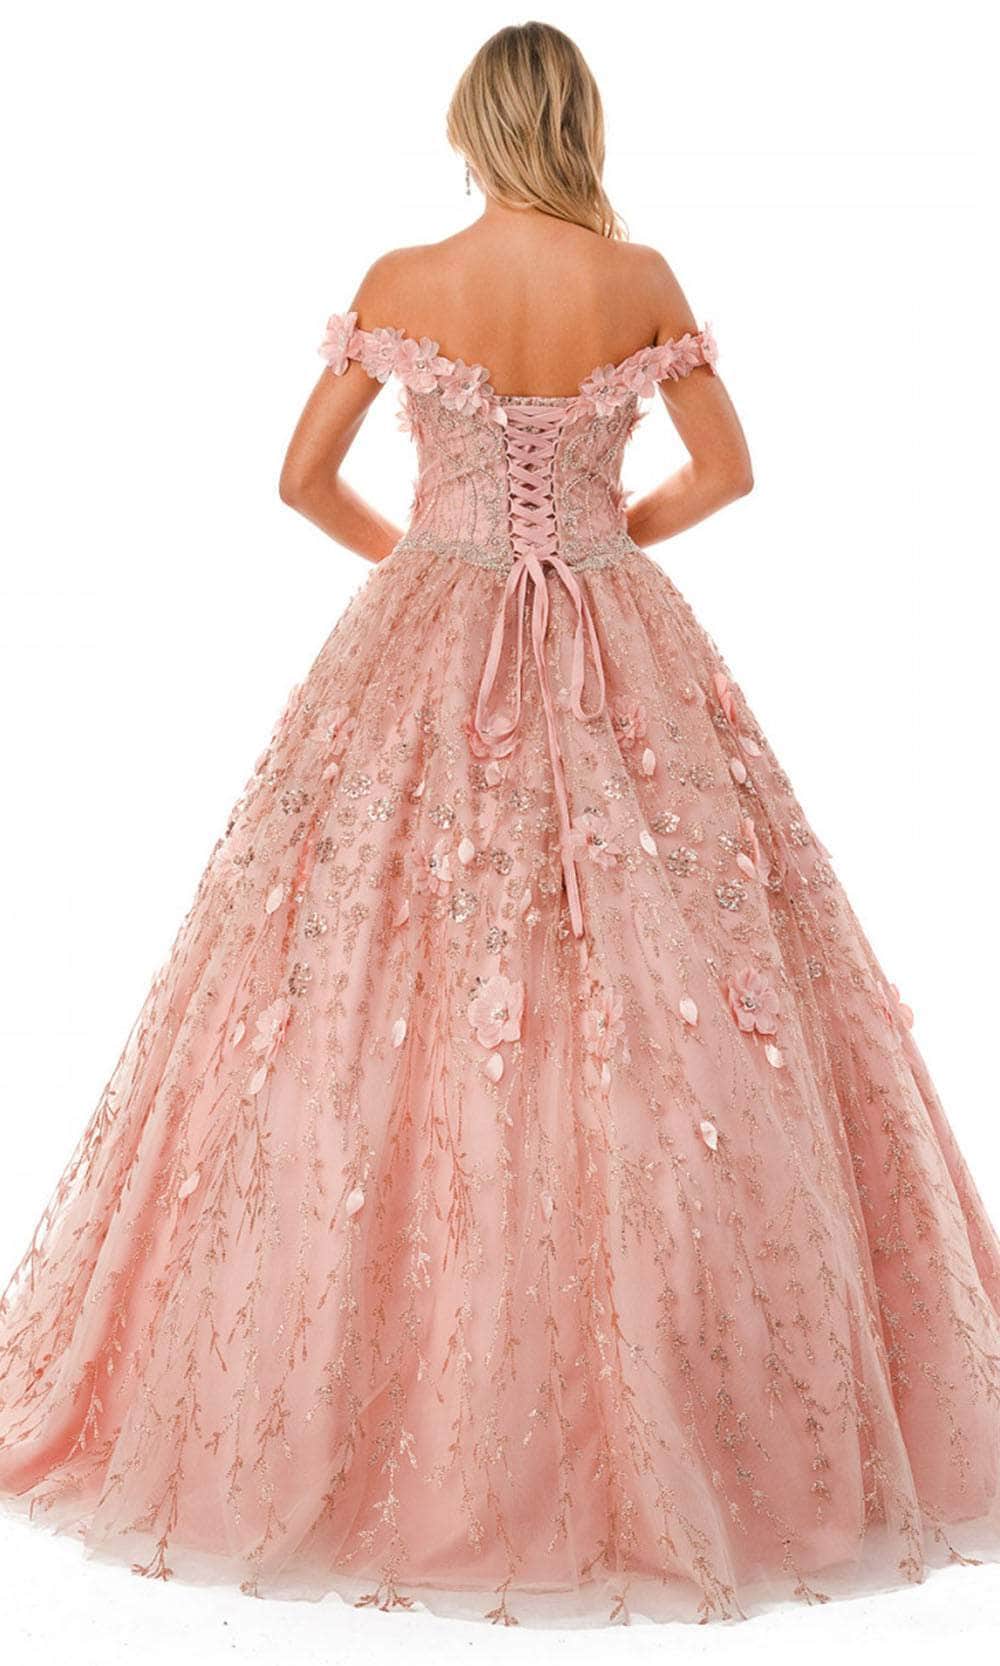 Aspeed Design L2728 - Sweetheart Embellished Ballgown